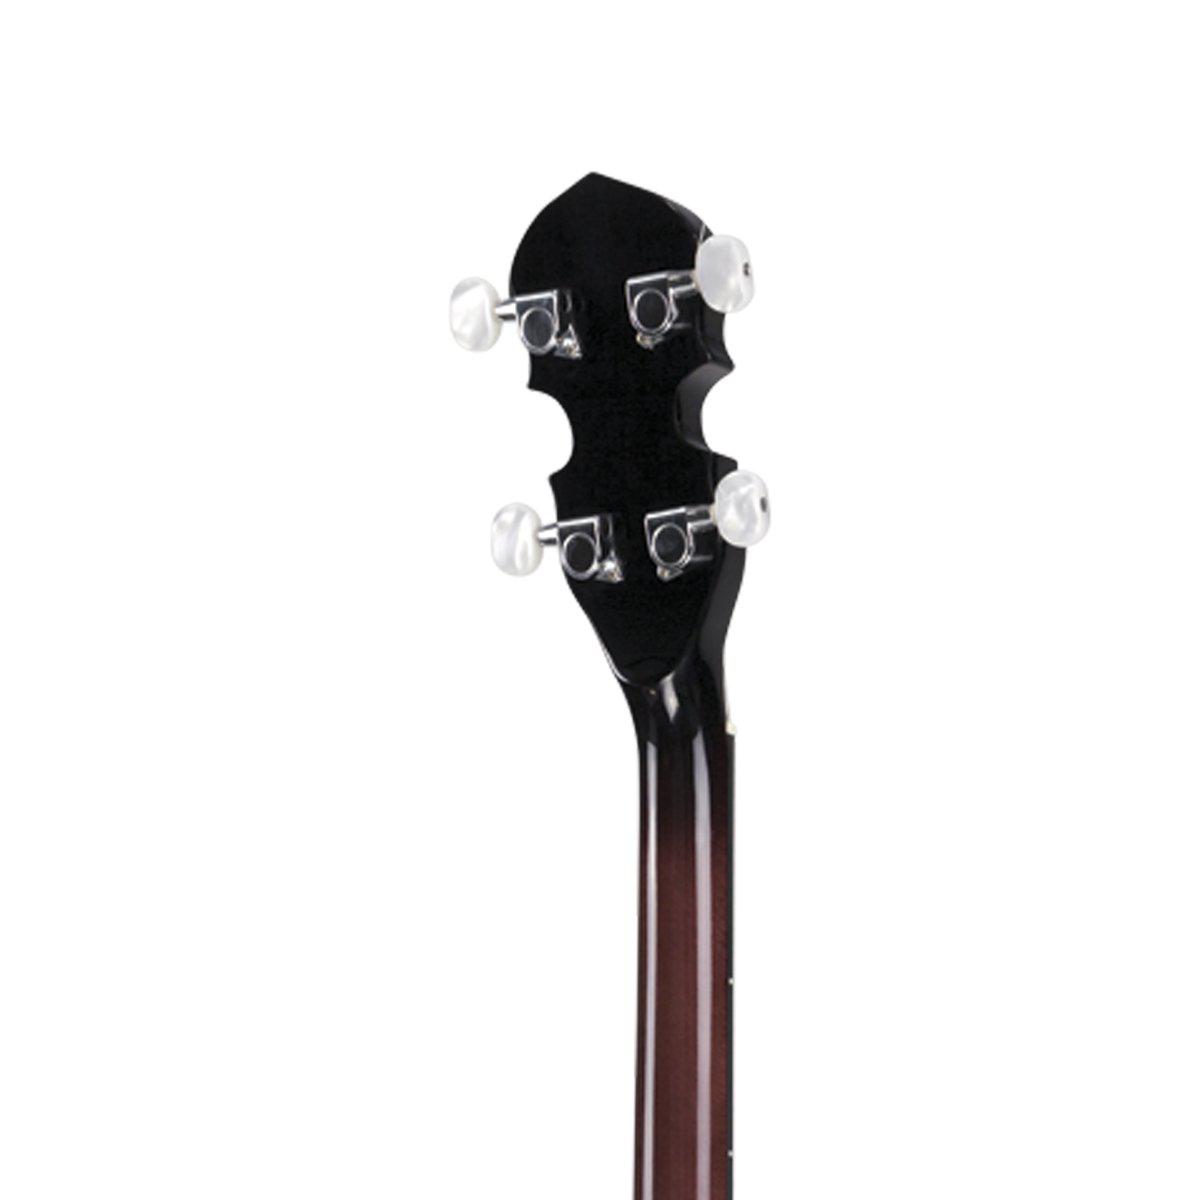 Martinez 4-String Tenor Resonator Banjo (Natural Gloss)